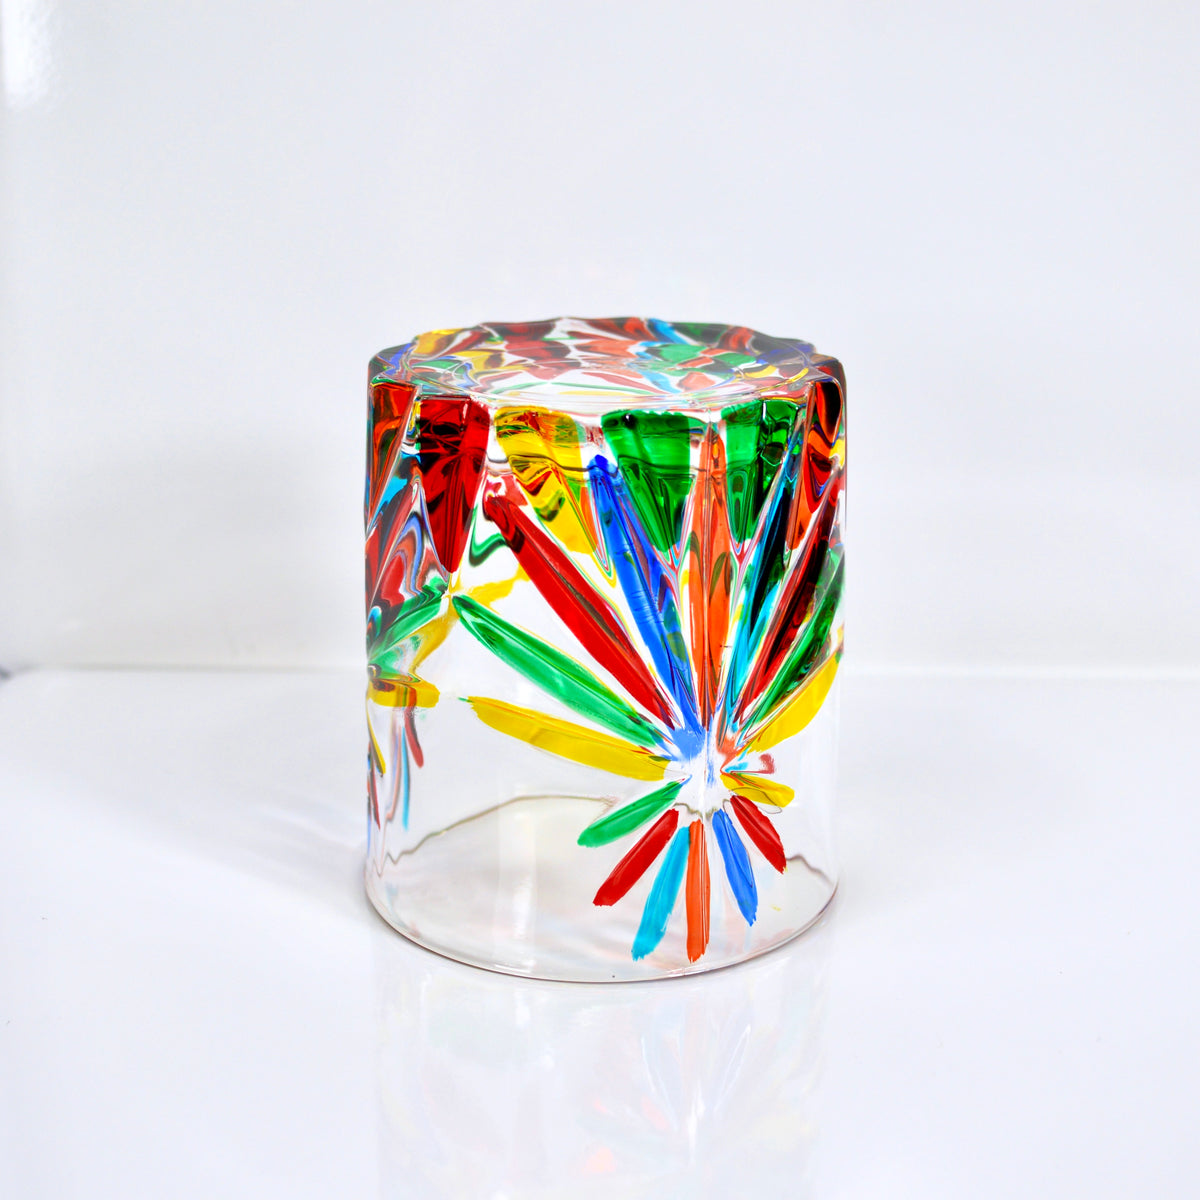 Starburst Short Drink Glasses, Hand-Painted Italian Crystal, Set of 2 - My Italian Decor